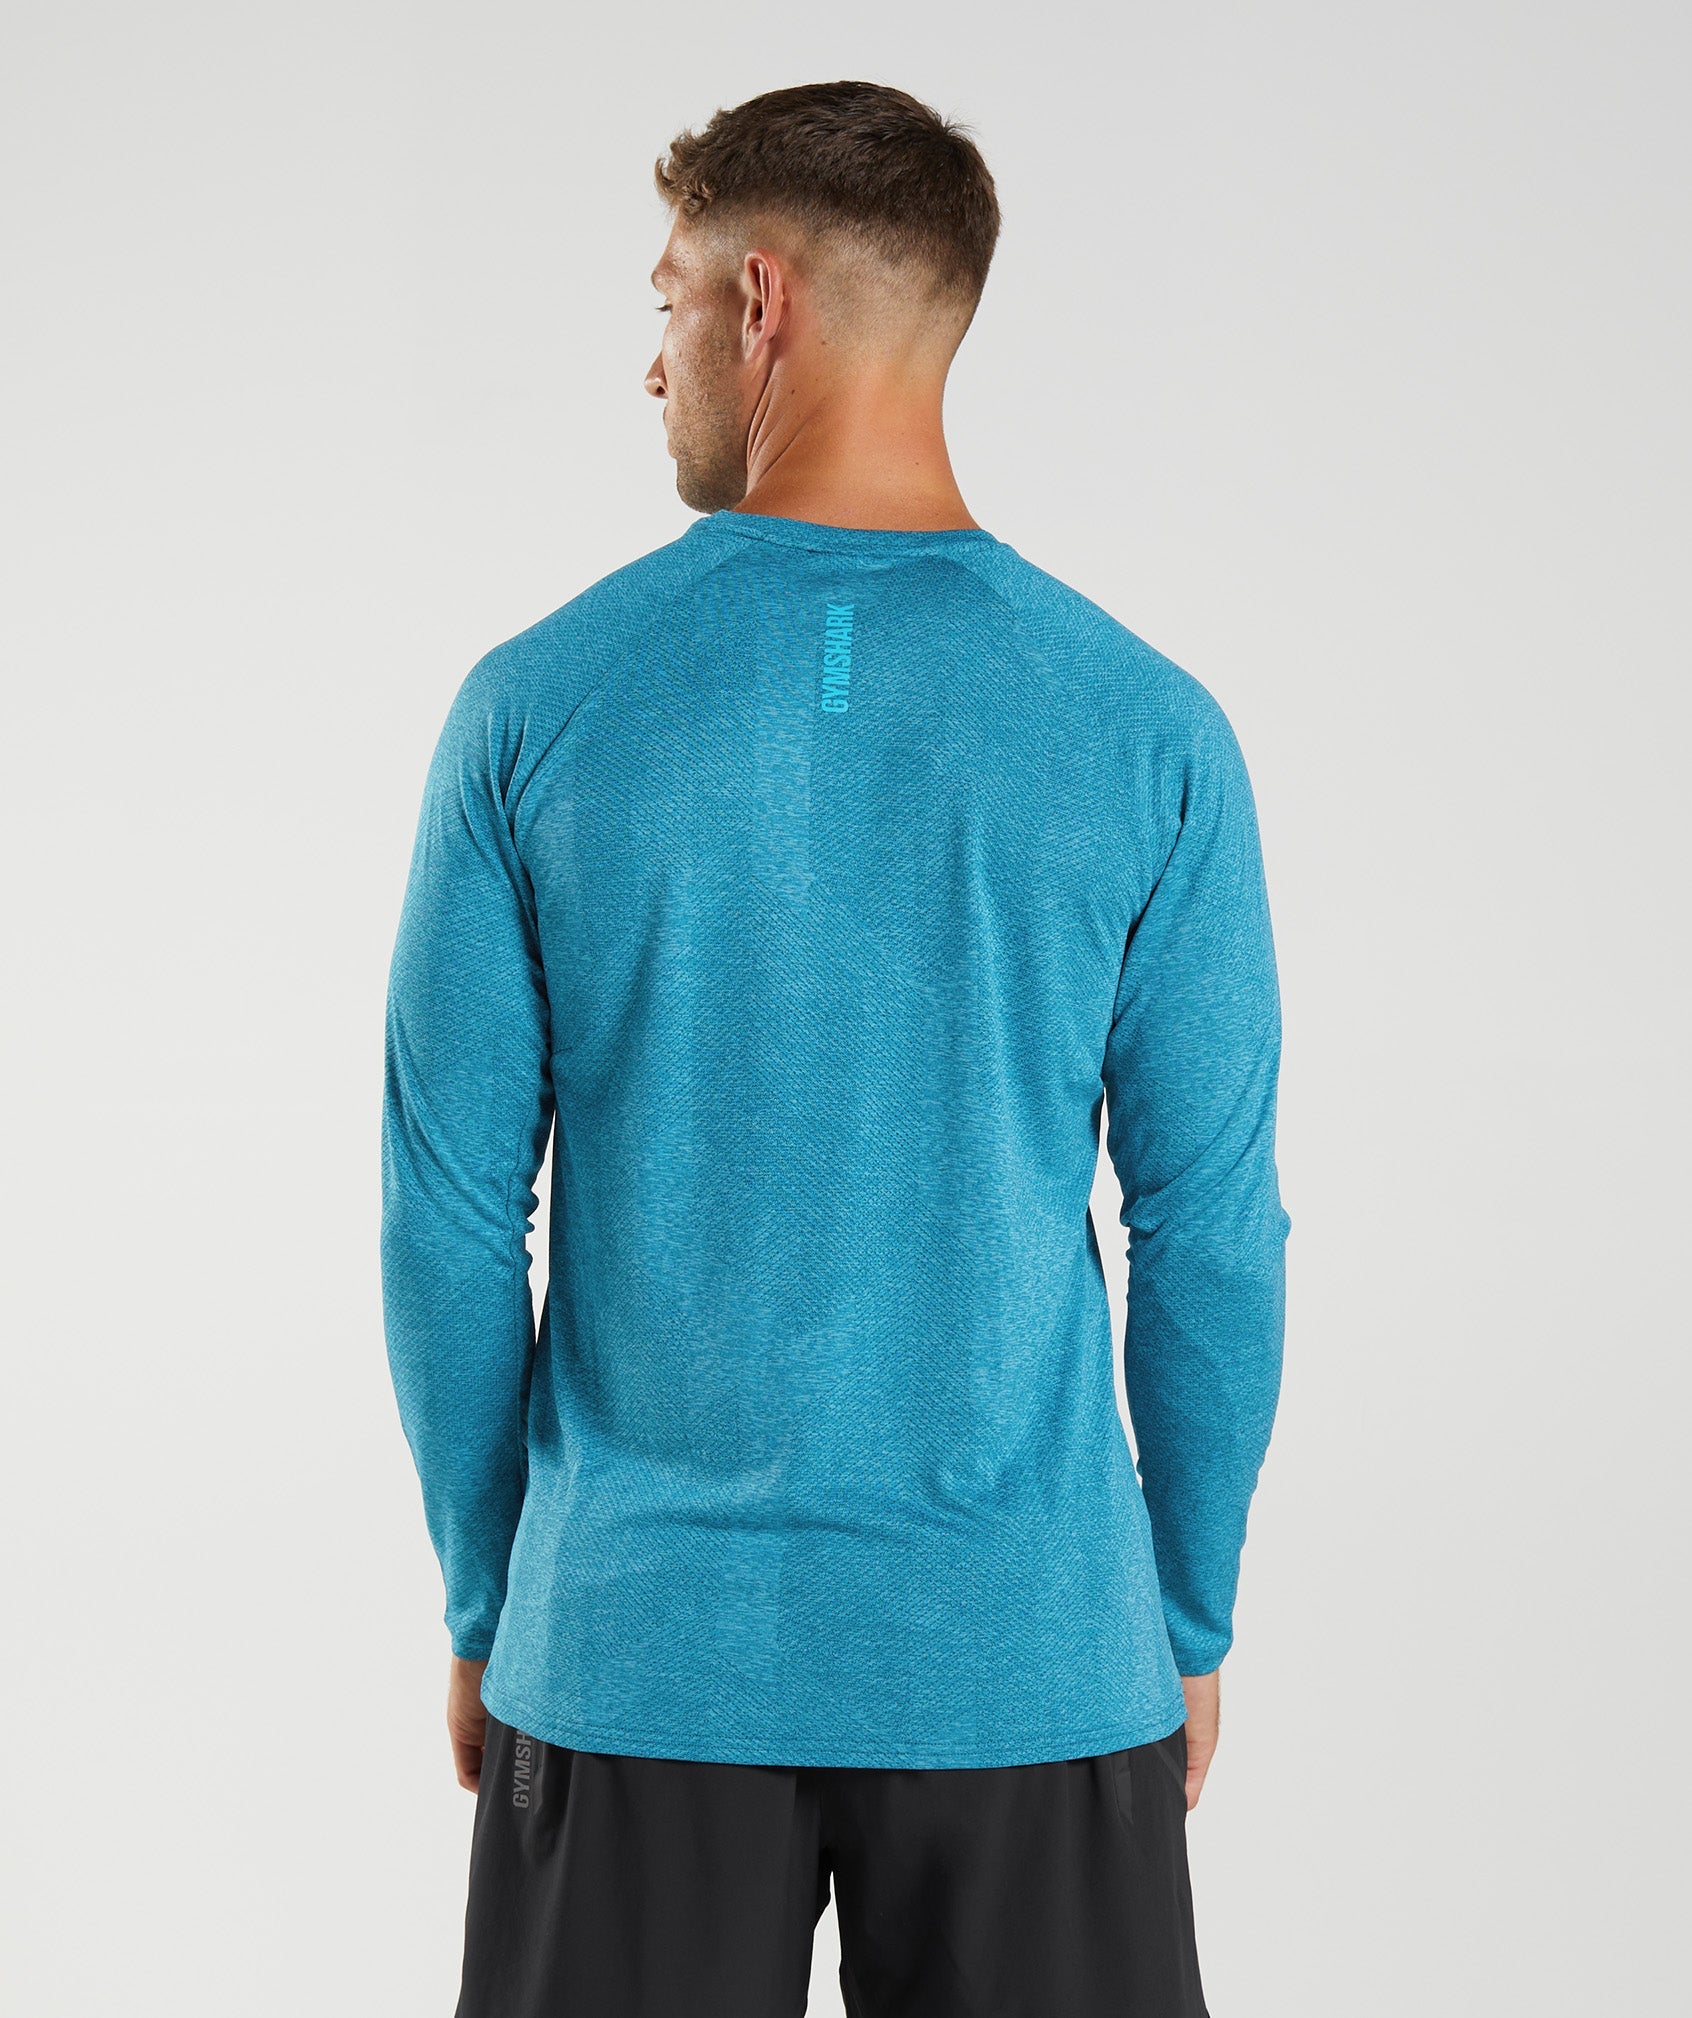 Apex Long Sleeve T-Shirt in Atlantic Blue/Shark Blue